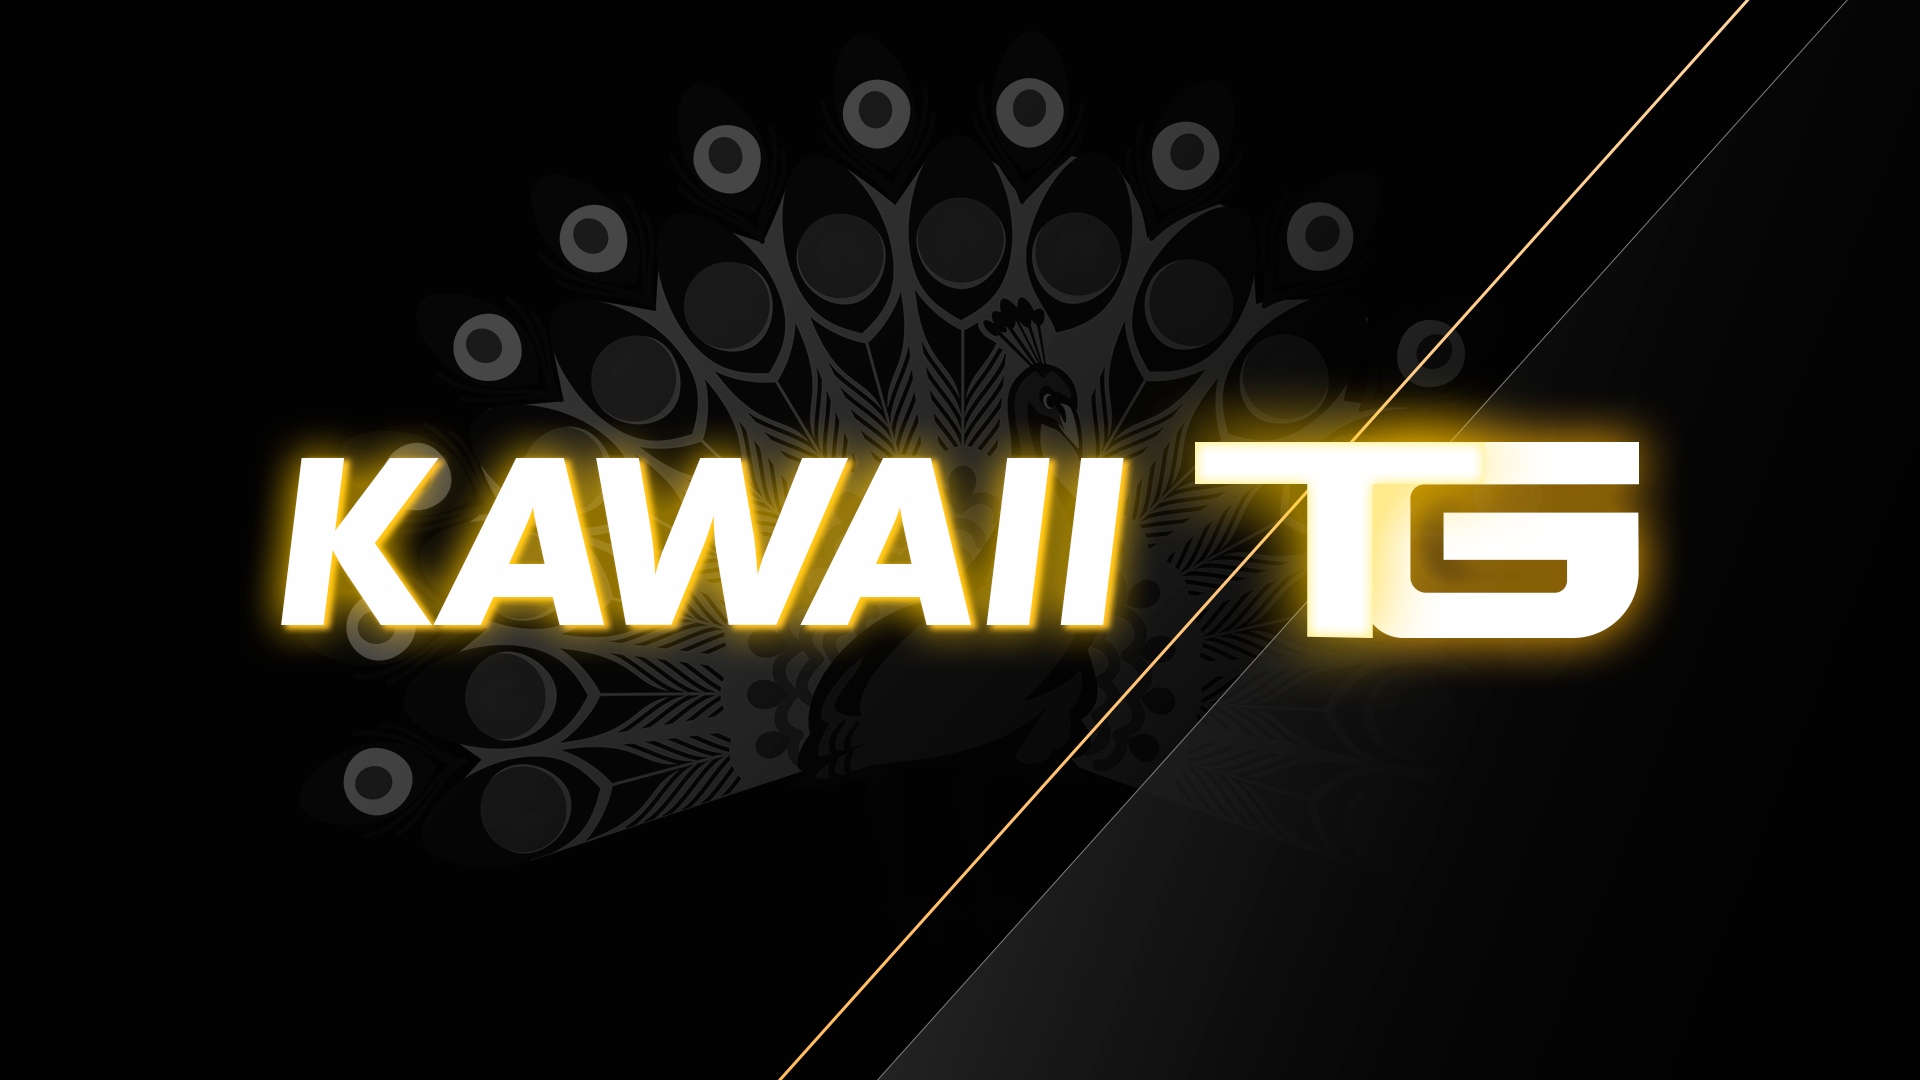 logo kawaii tg invite discord